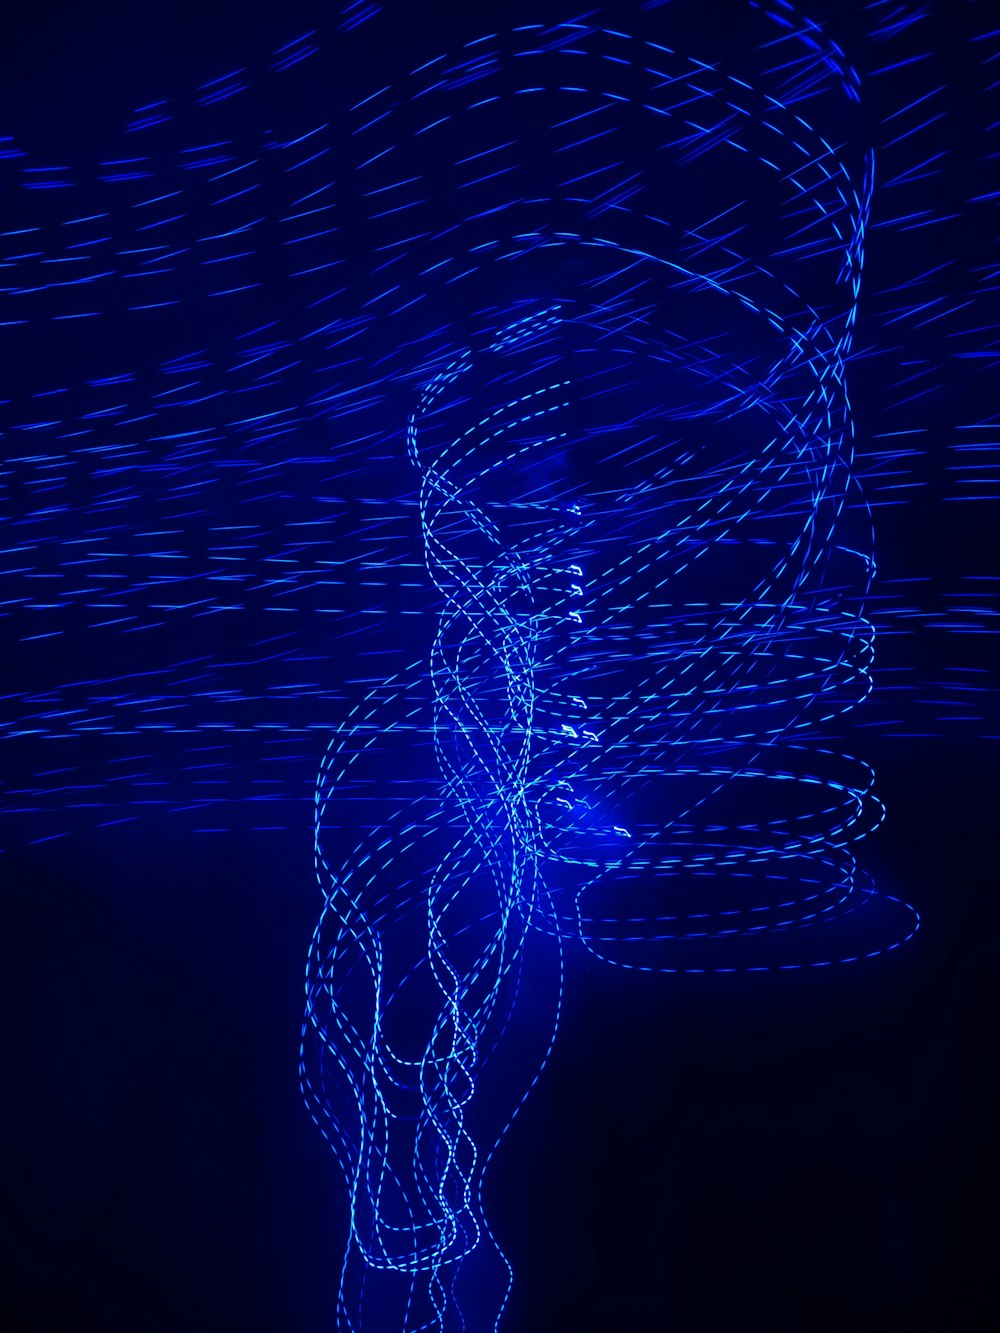 a spiral of blue lights in the dark